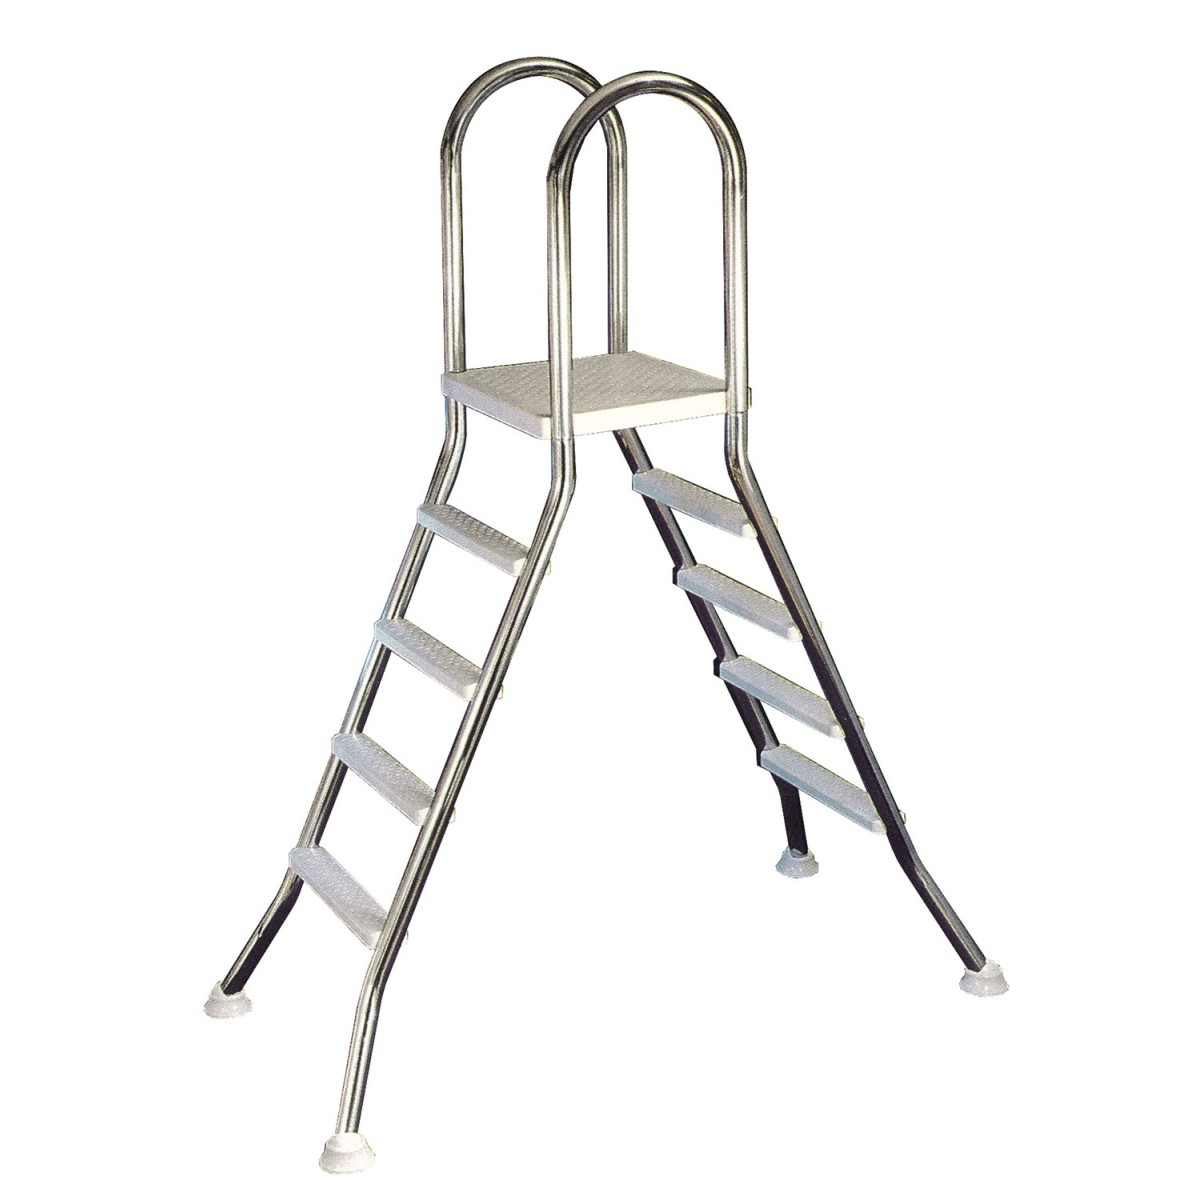 Gran Confort ladder for above ground pools